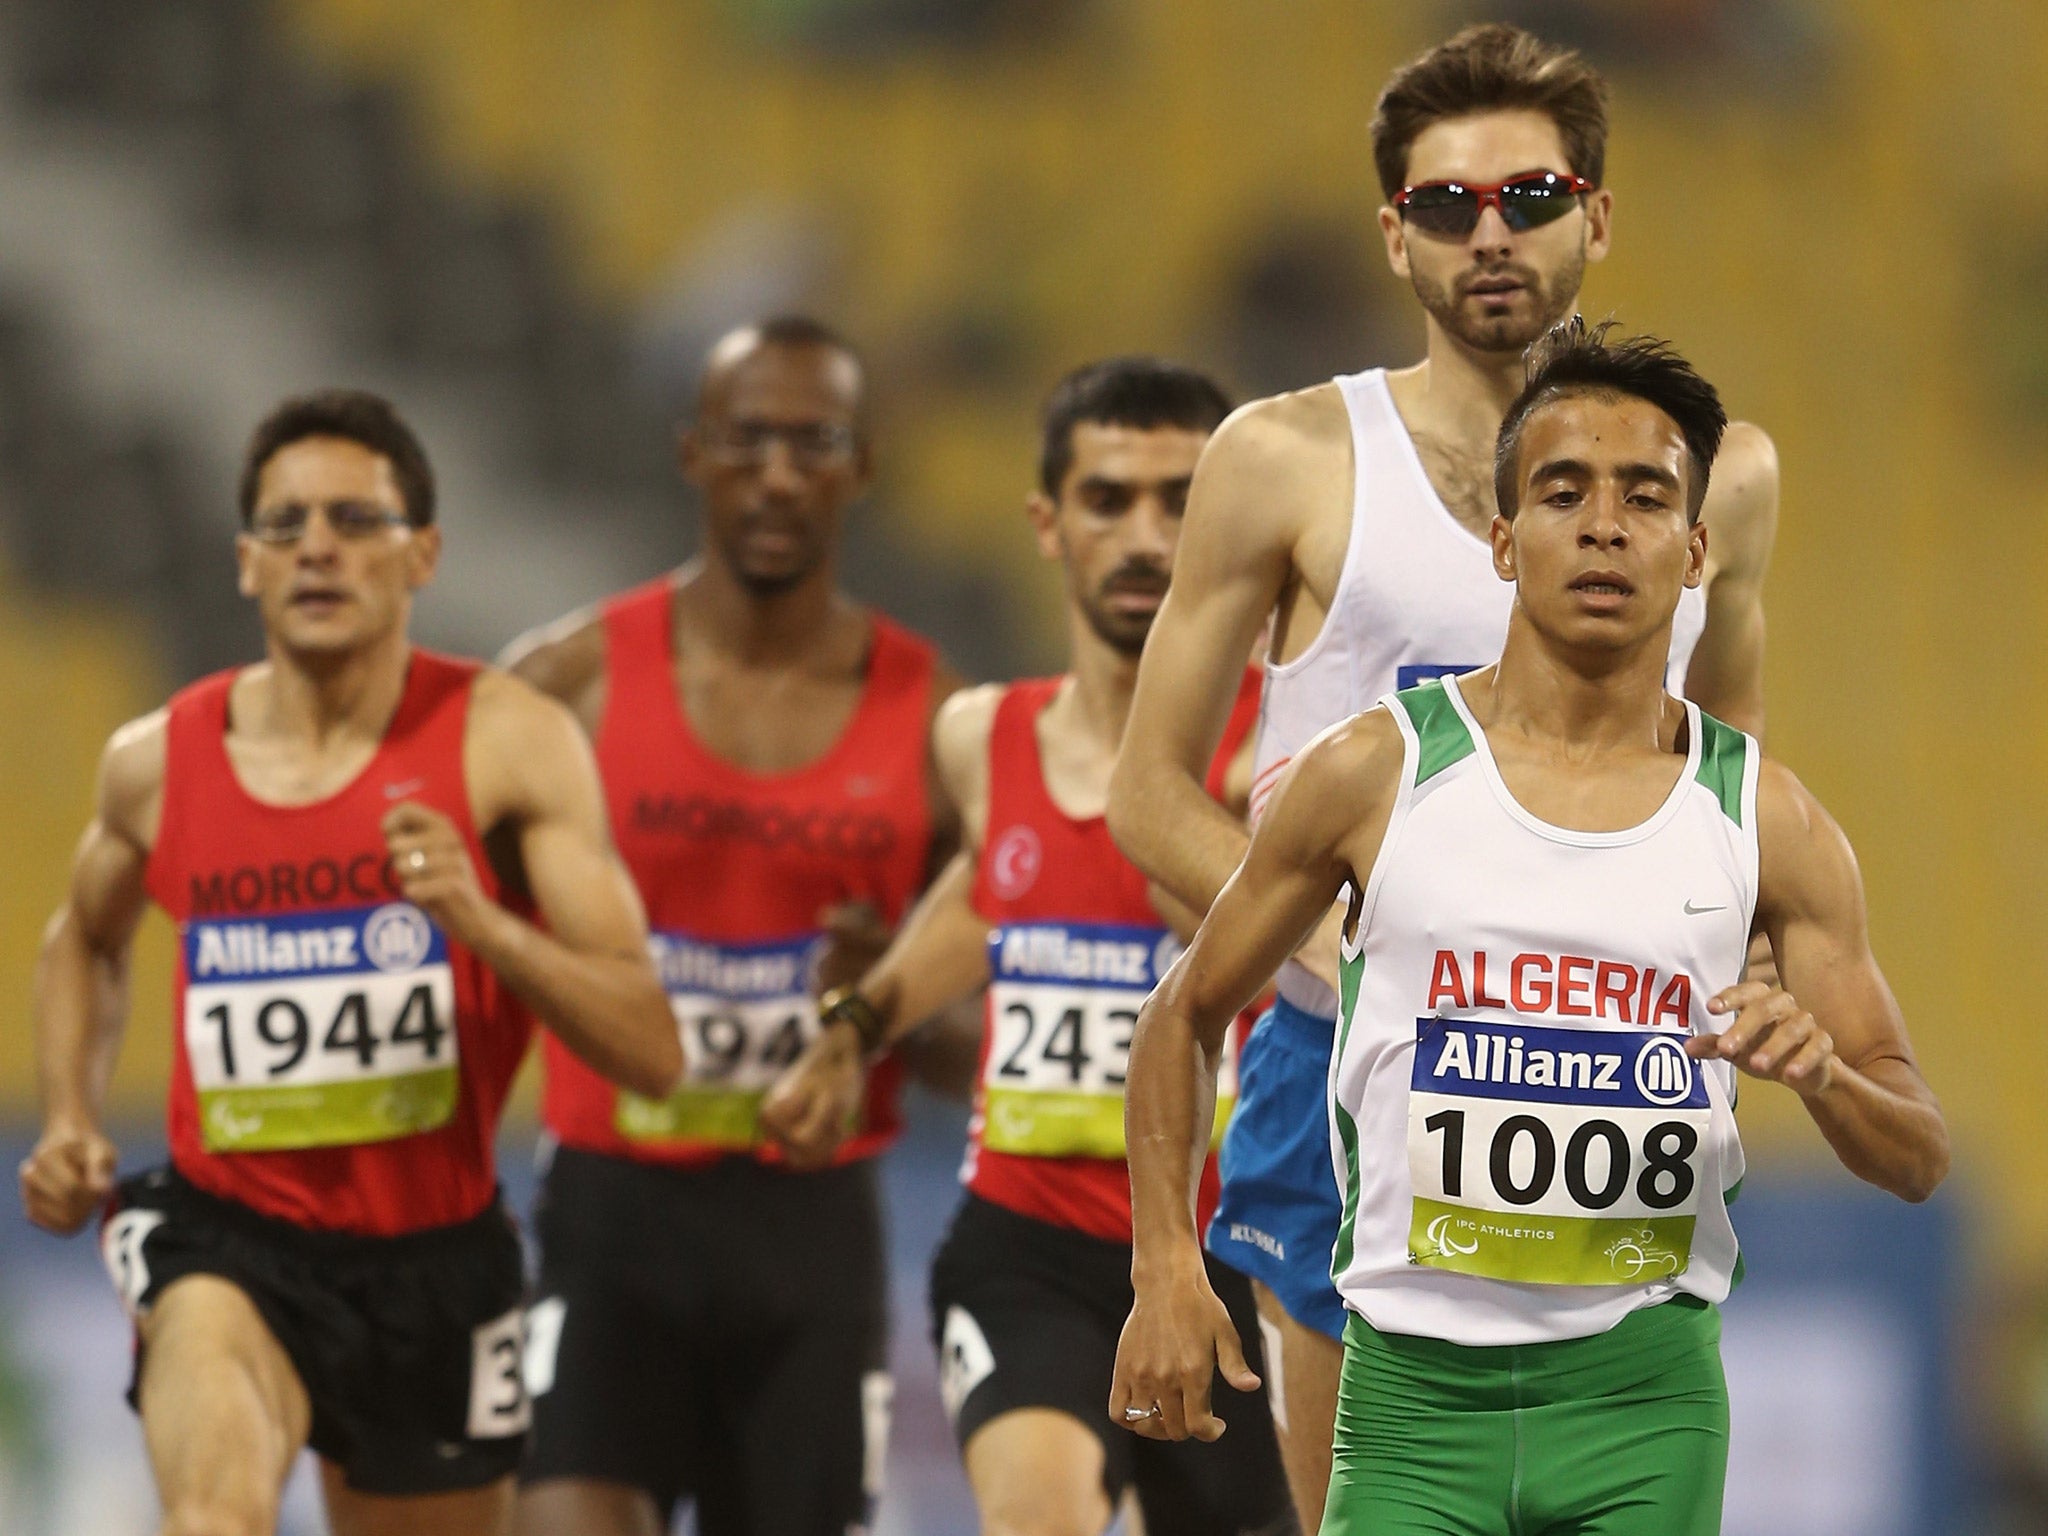 Abdellatif Baka recorded a faster time than Olympic gold medallist Matthew Centrowitz